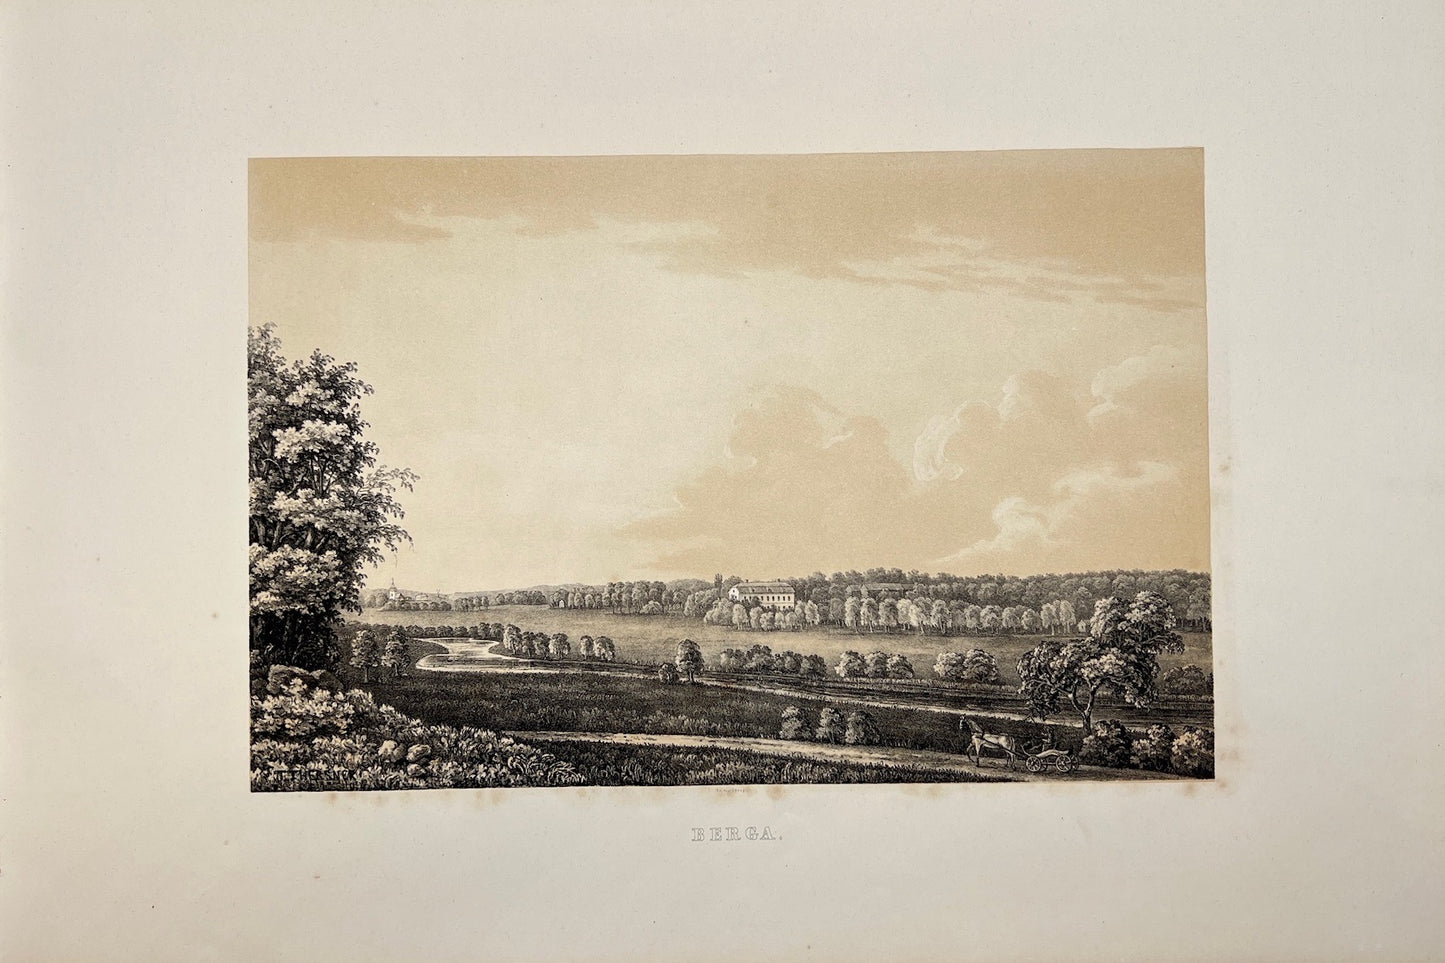 Antique Print - View of Berga - Hogsby Municipal - Kalmar County - Sweden - 1828